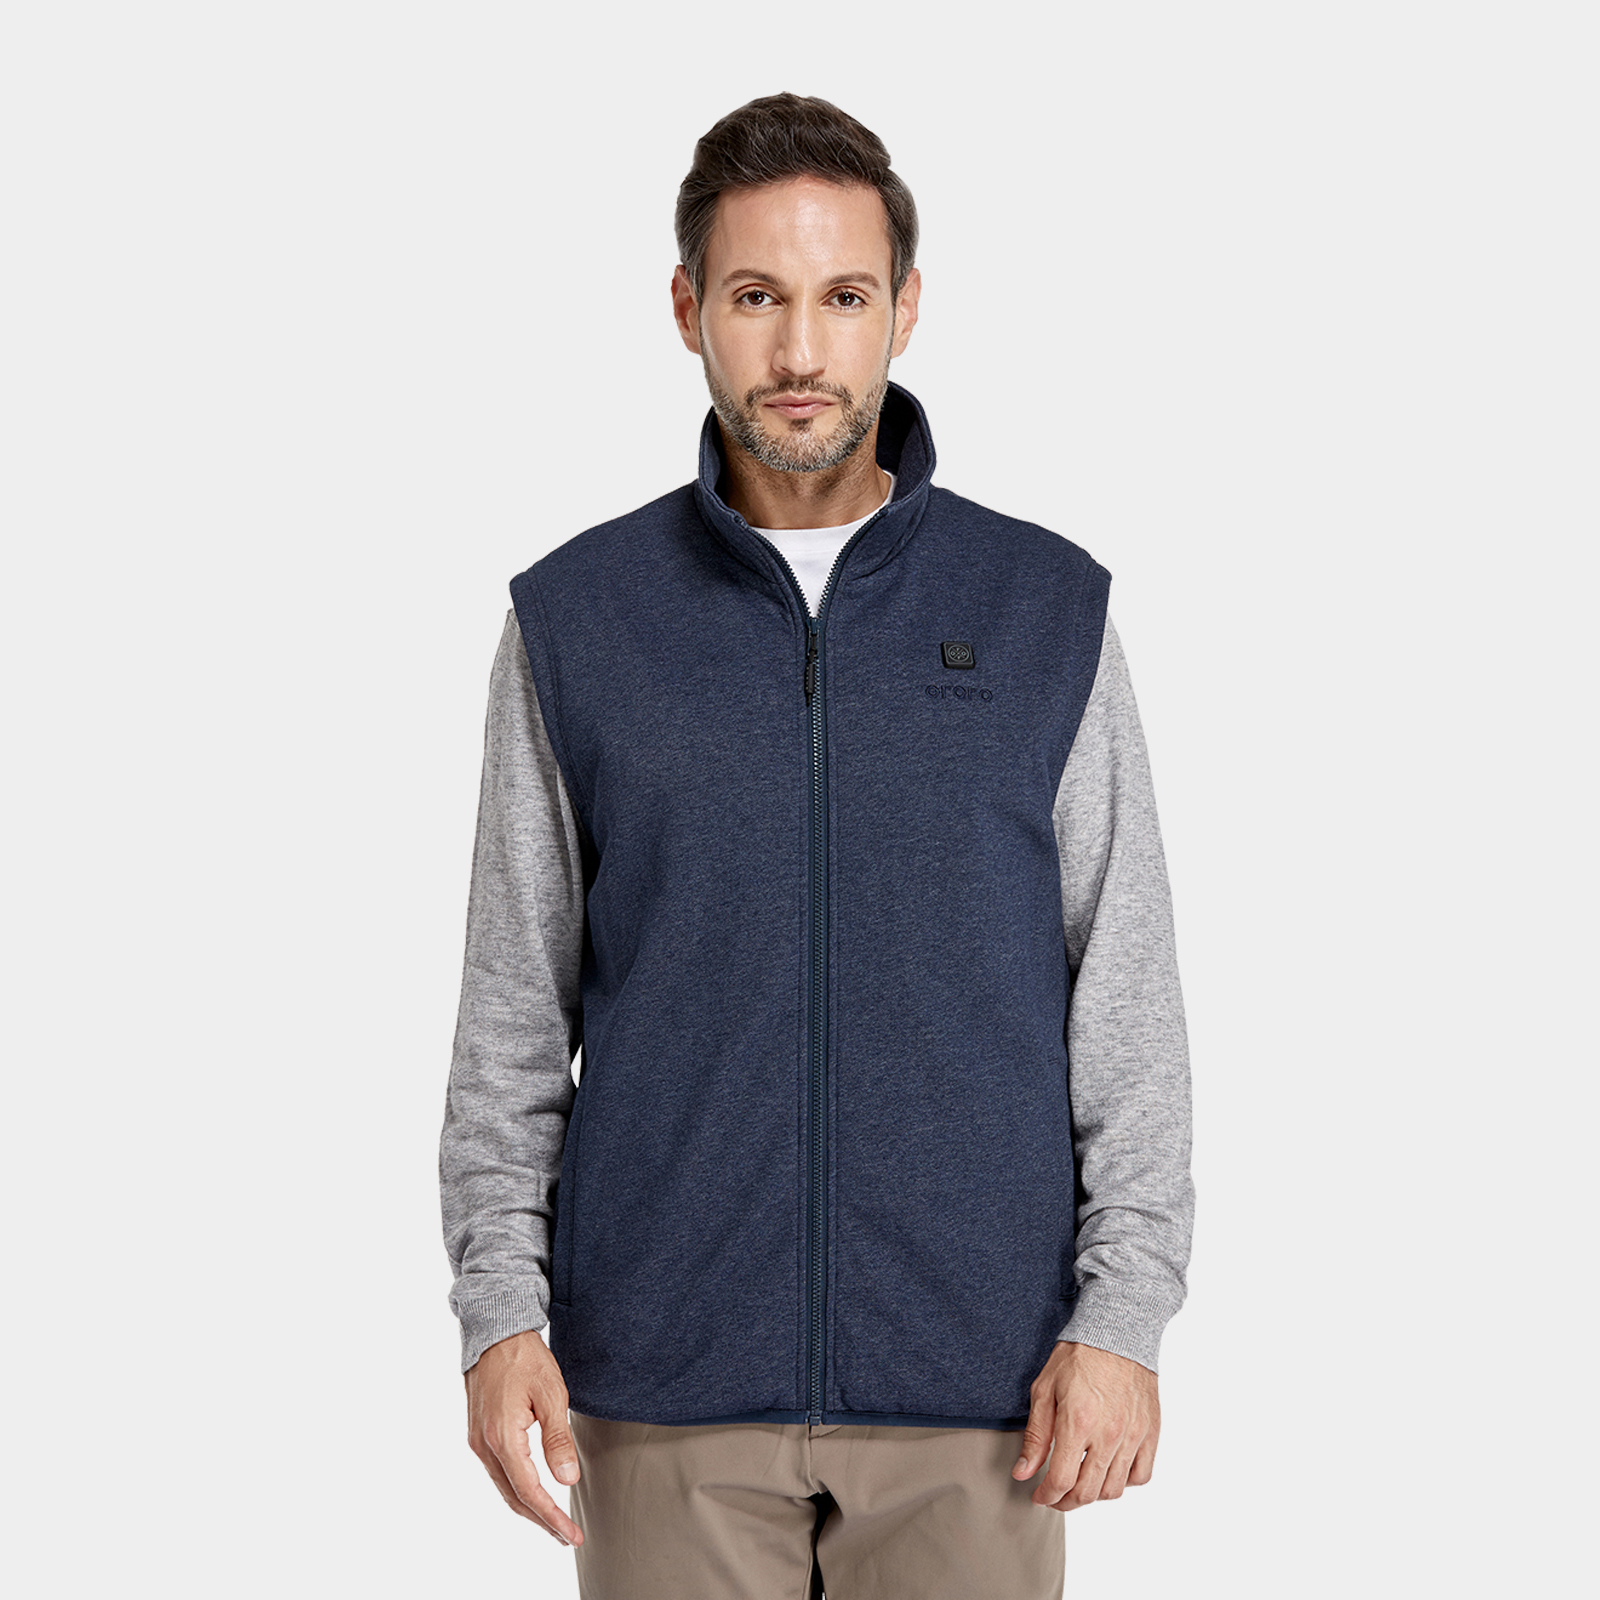 ORORO Men's Fleece Heated Vest with Battery Pack - image 2 of 6